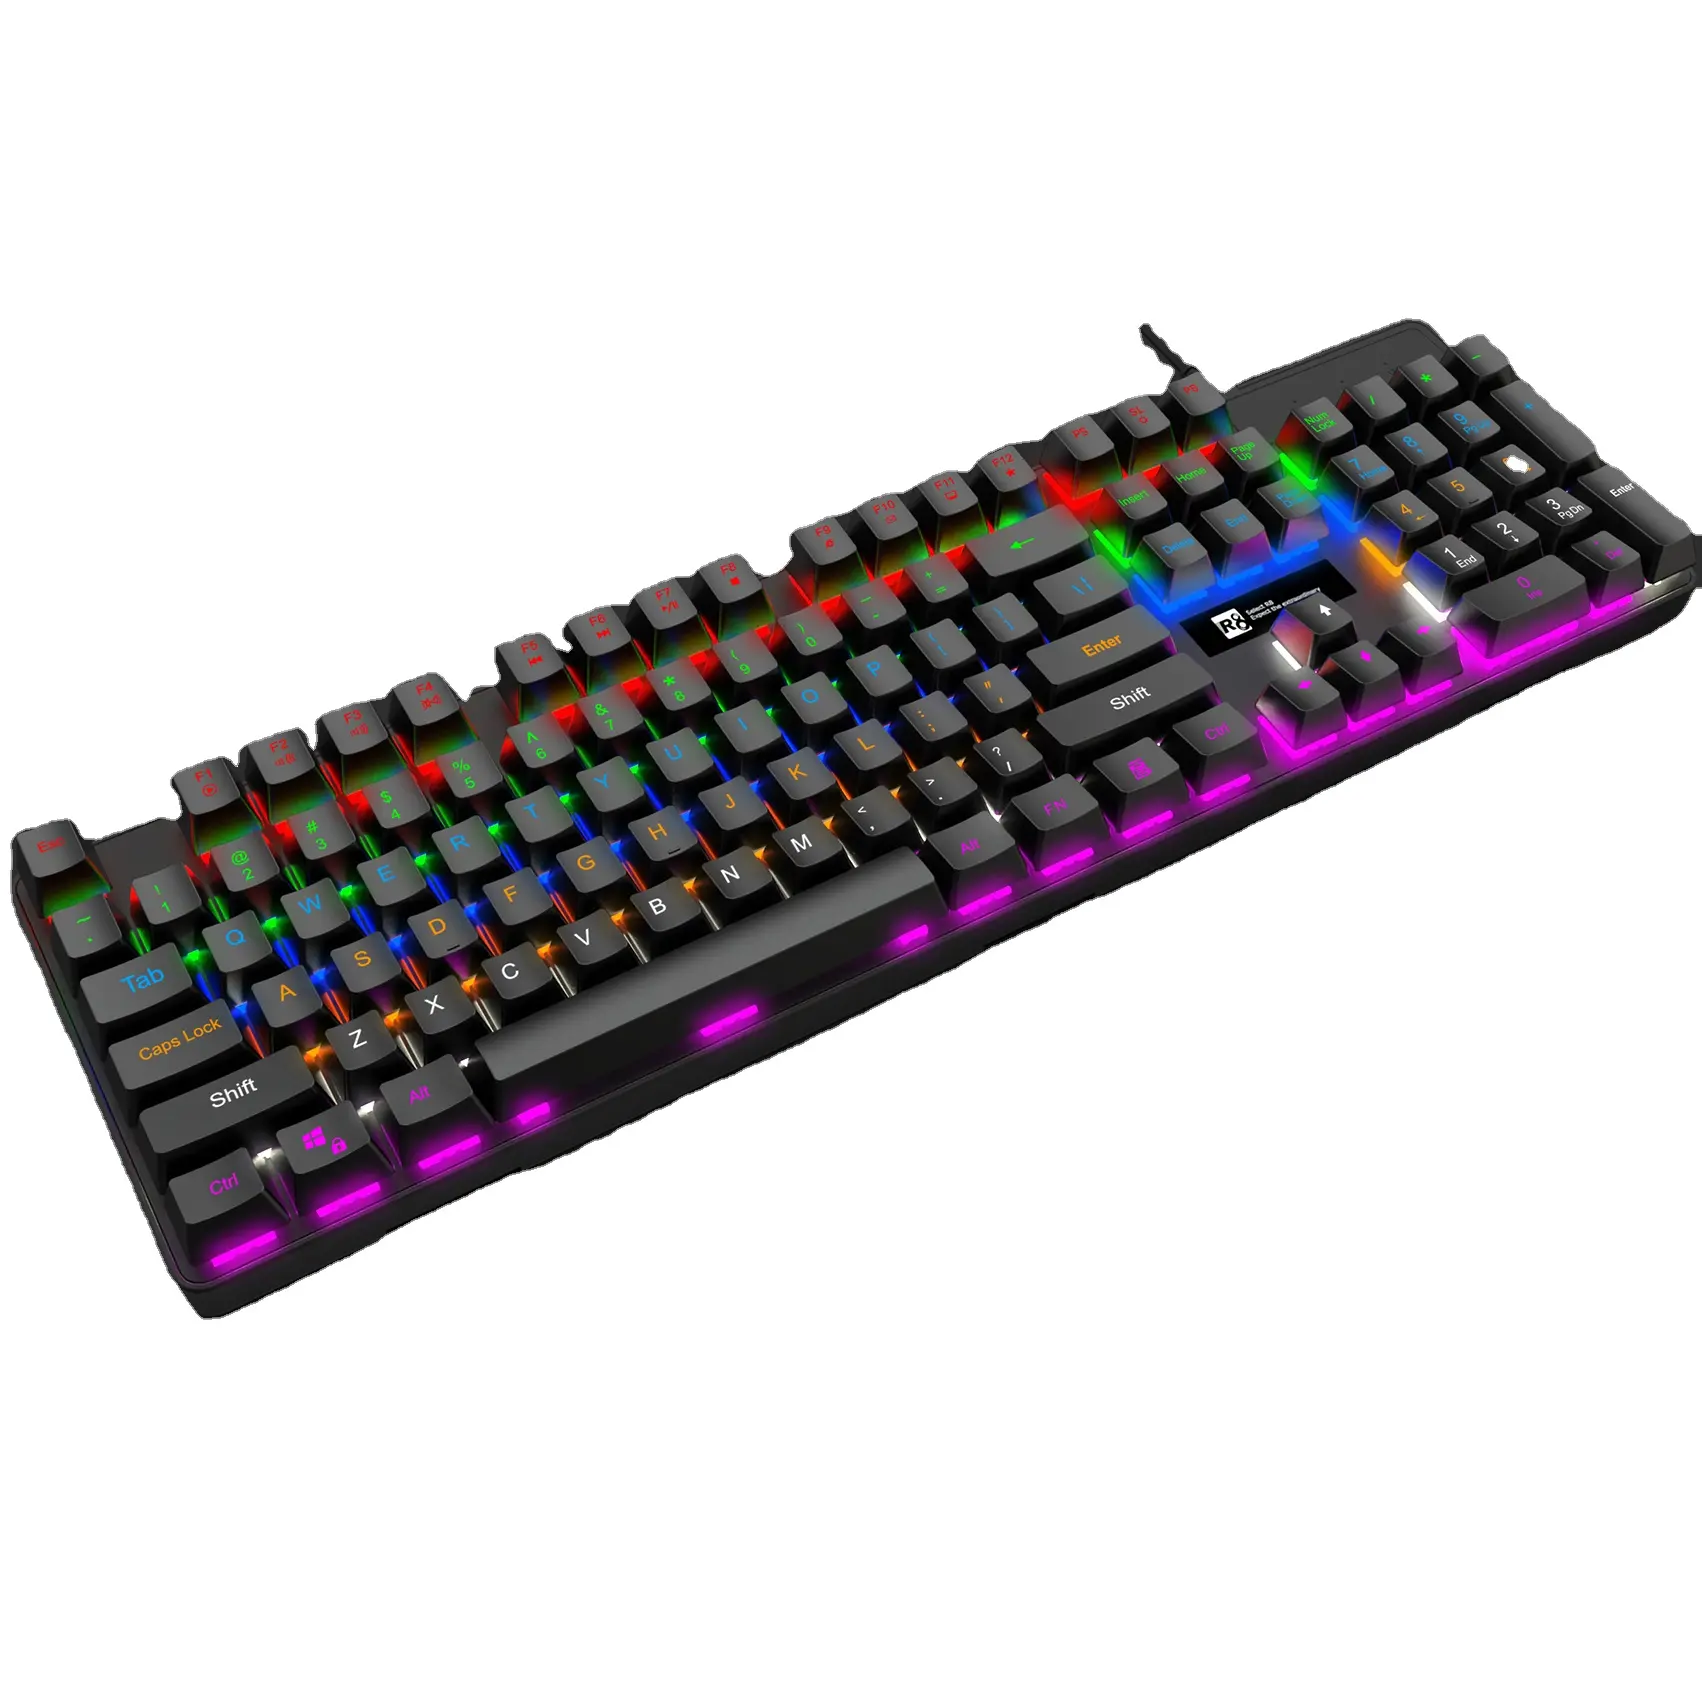 OEM ยี่ห้อเครื่องเล่น RGB แบบมีสายการยศาสตร์คอมพิวเตอร์เล่นเกมแป้นพิมพ์ที่มีสีรุ้งนำแสง